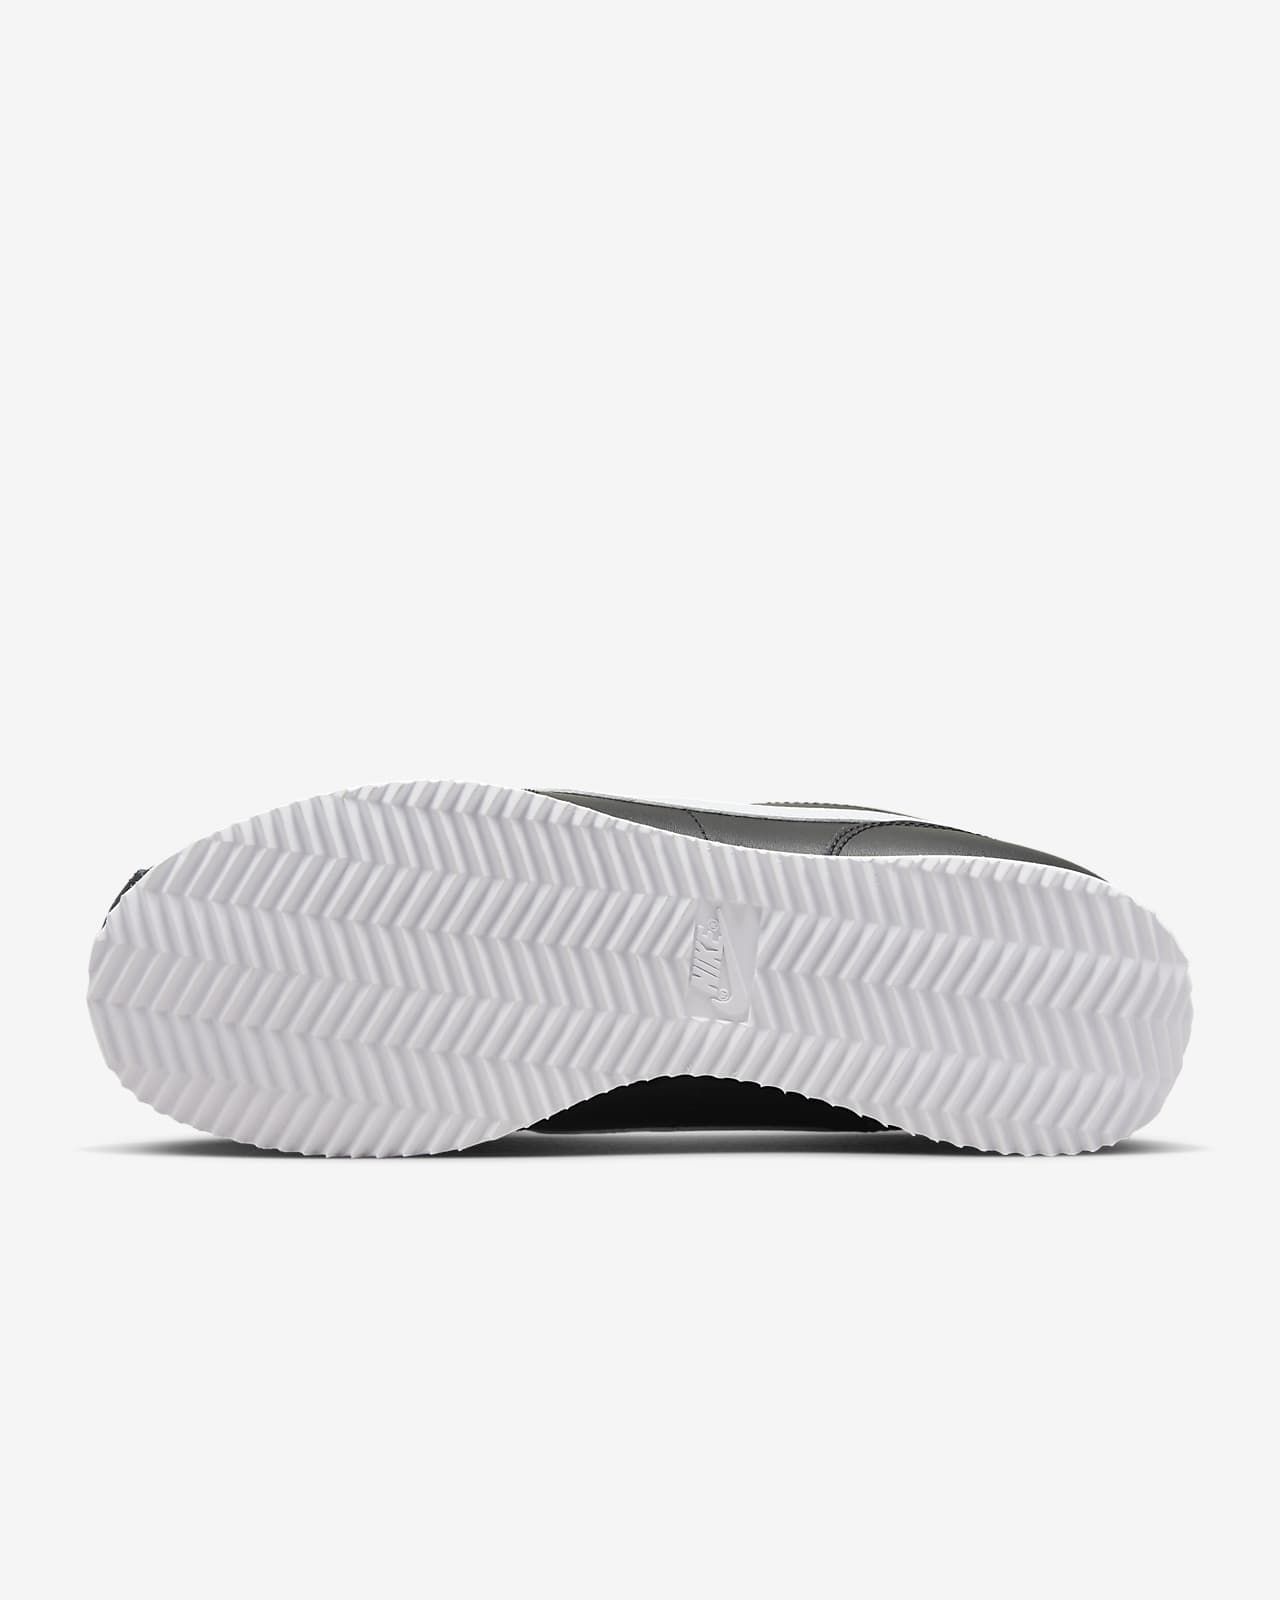 Buy Nike Cortez Shoes For Women online | Lazada.com.ph